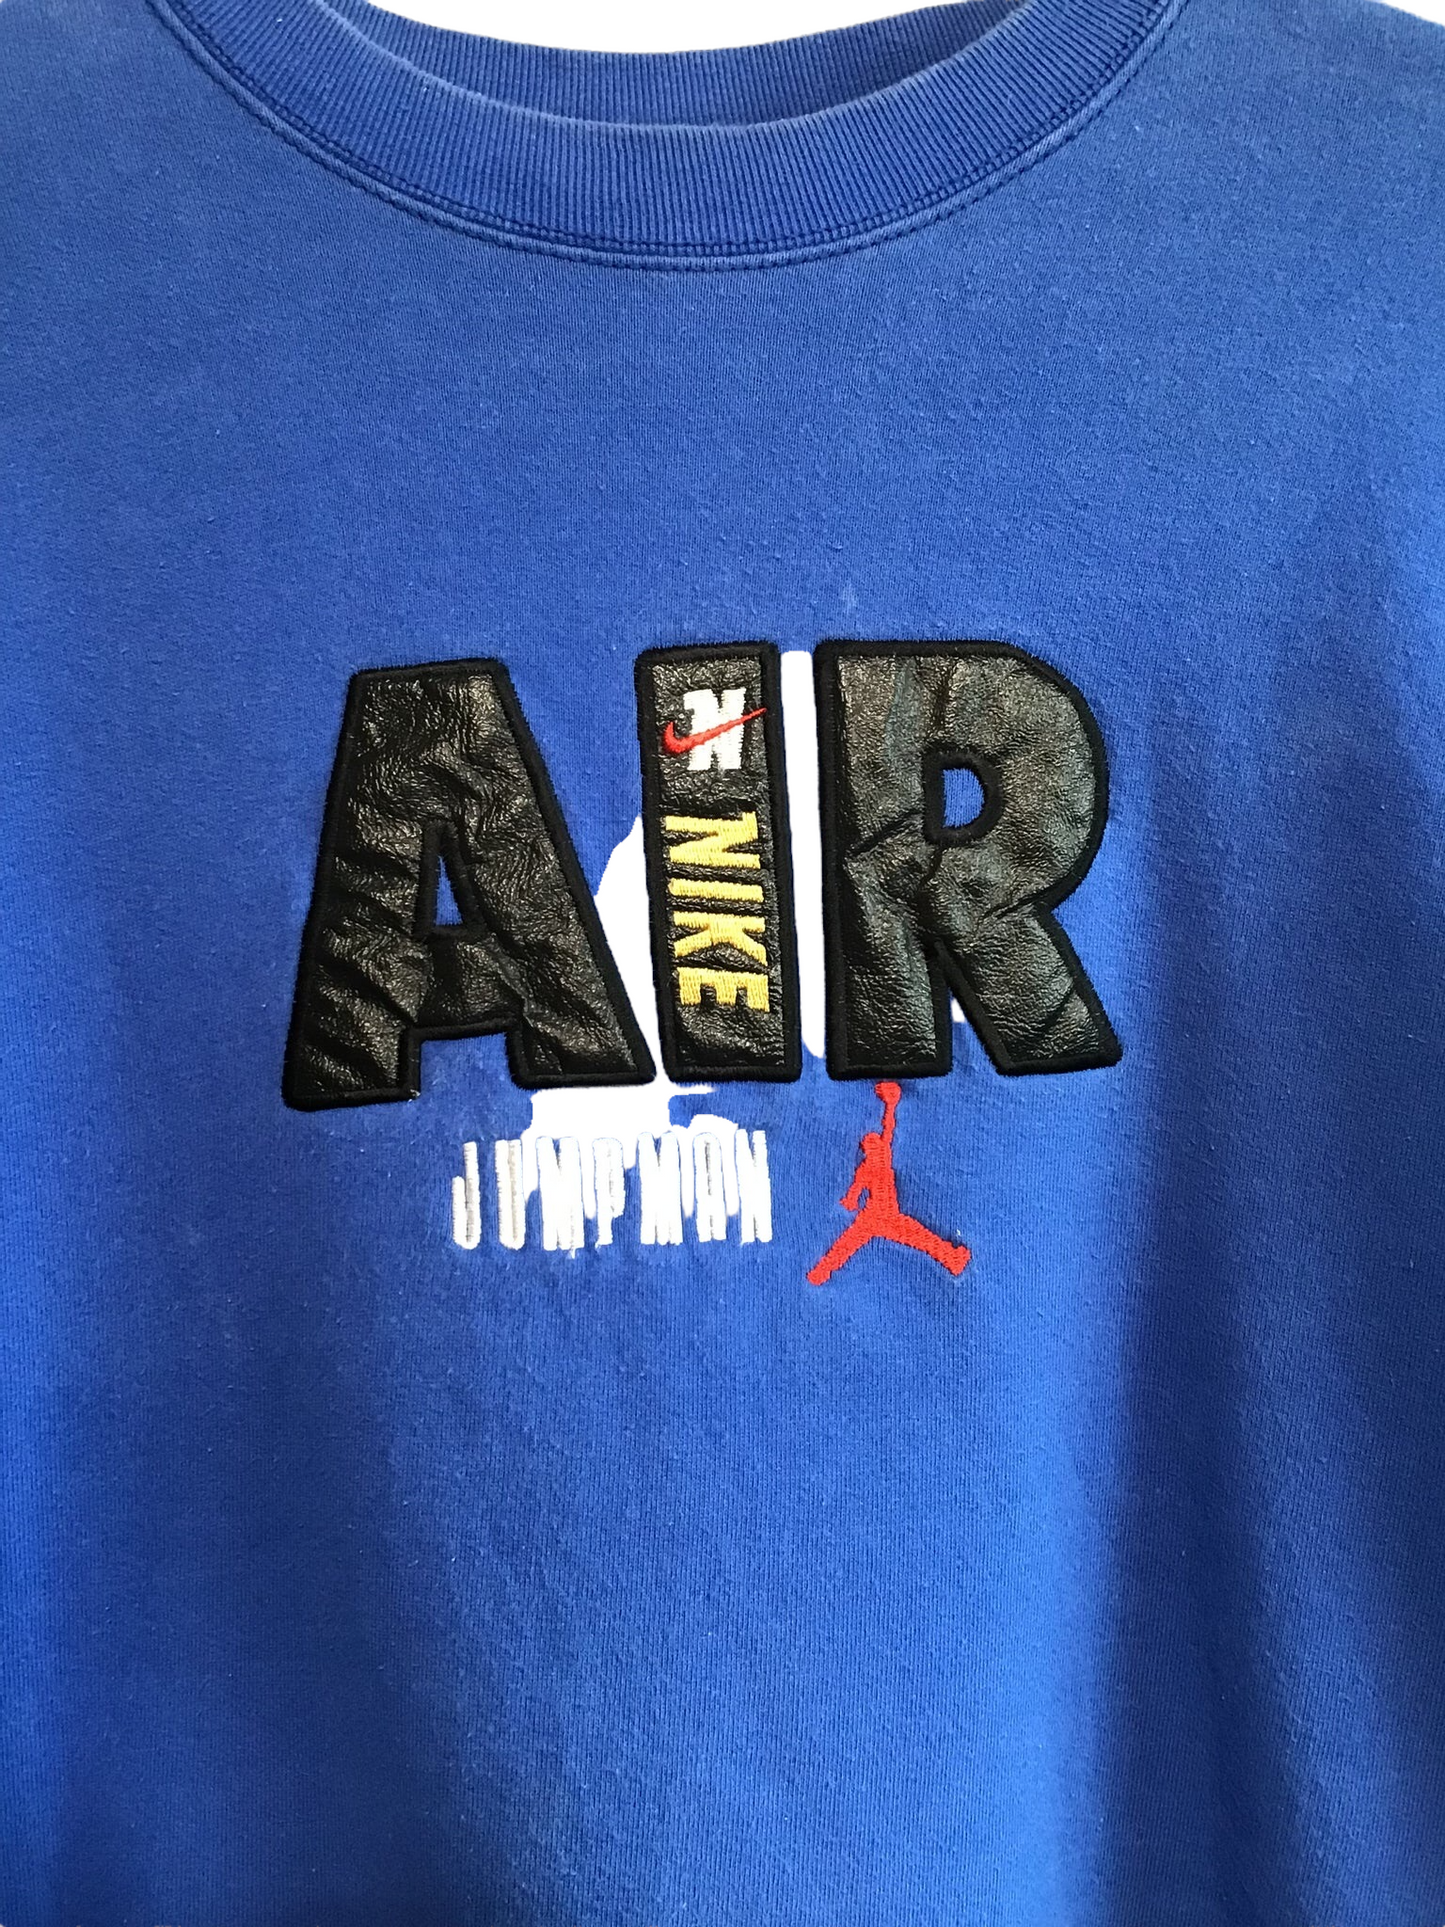 Nike Air Jumpman Sweatshirt (Size M)